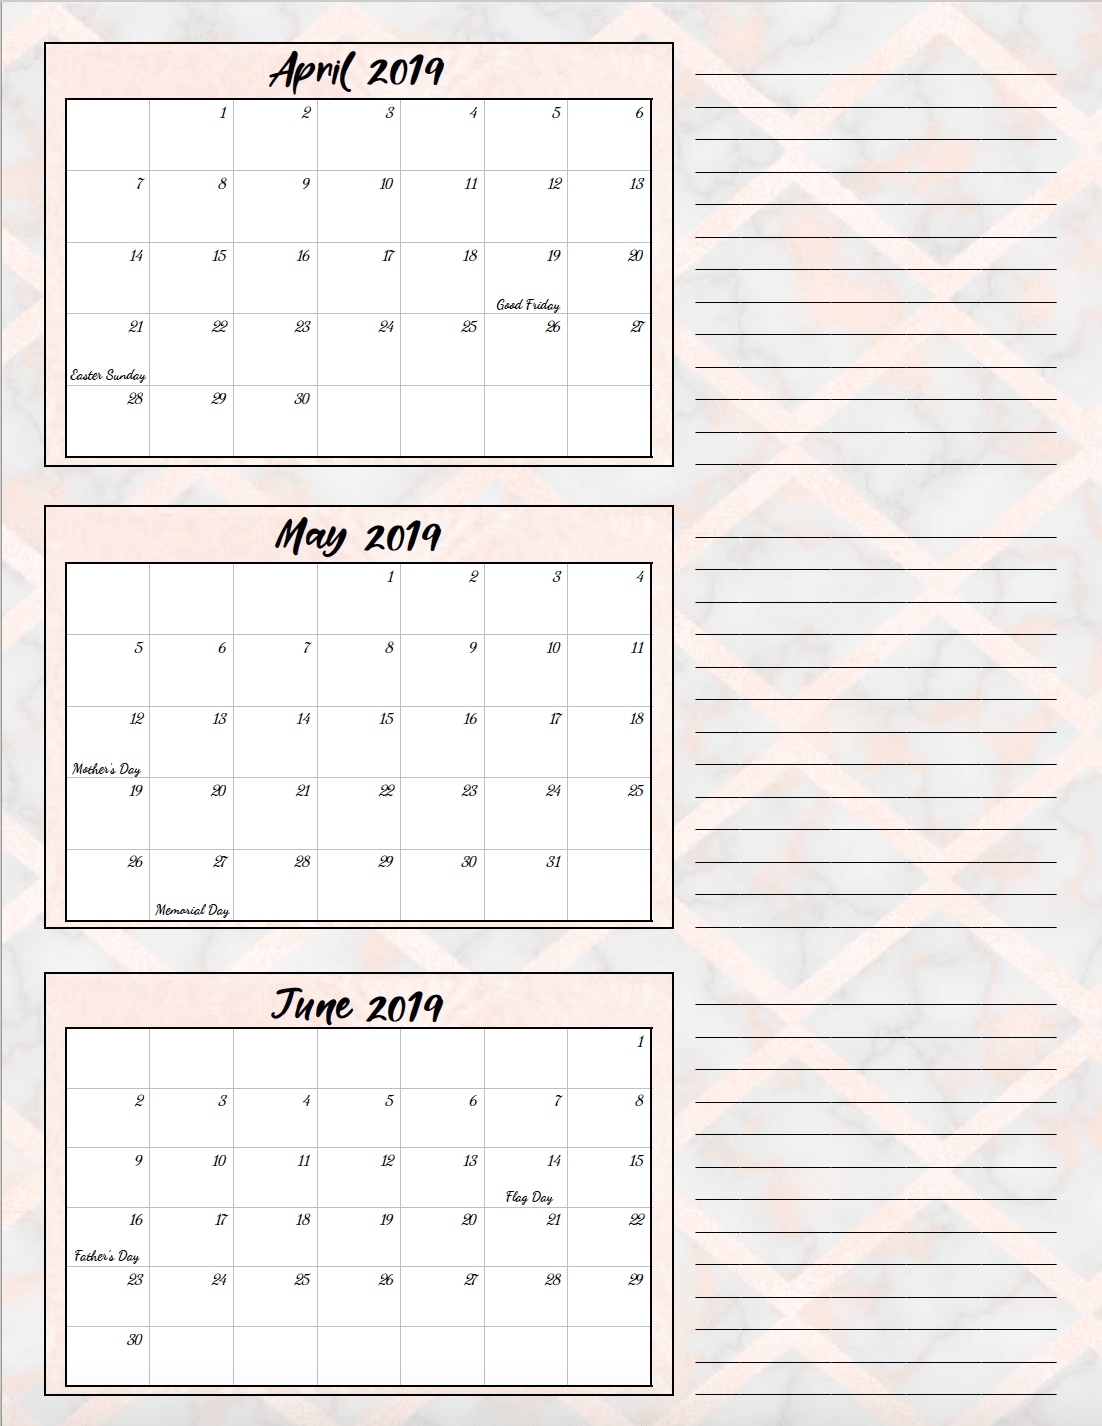 Free Printable 2019 Quarterly Calendars With Holidays: 3 Designs